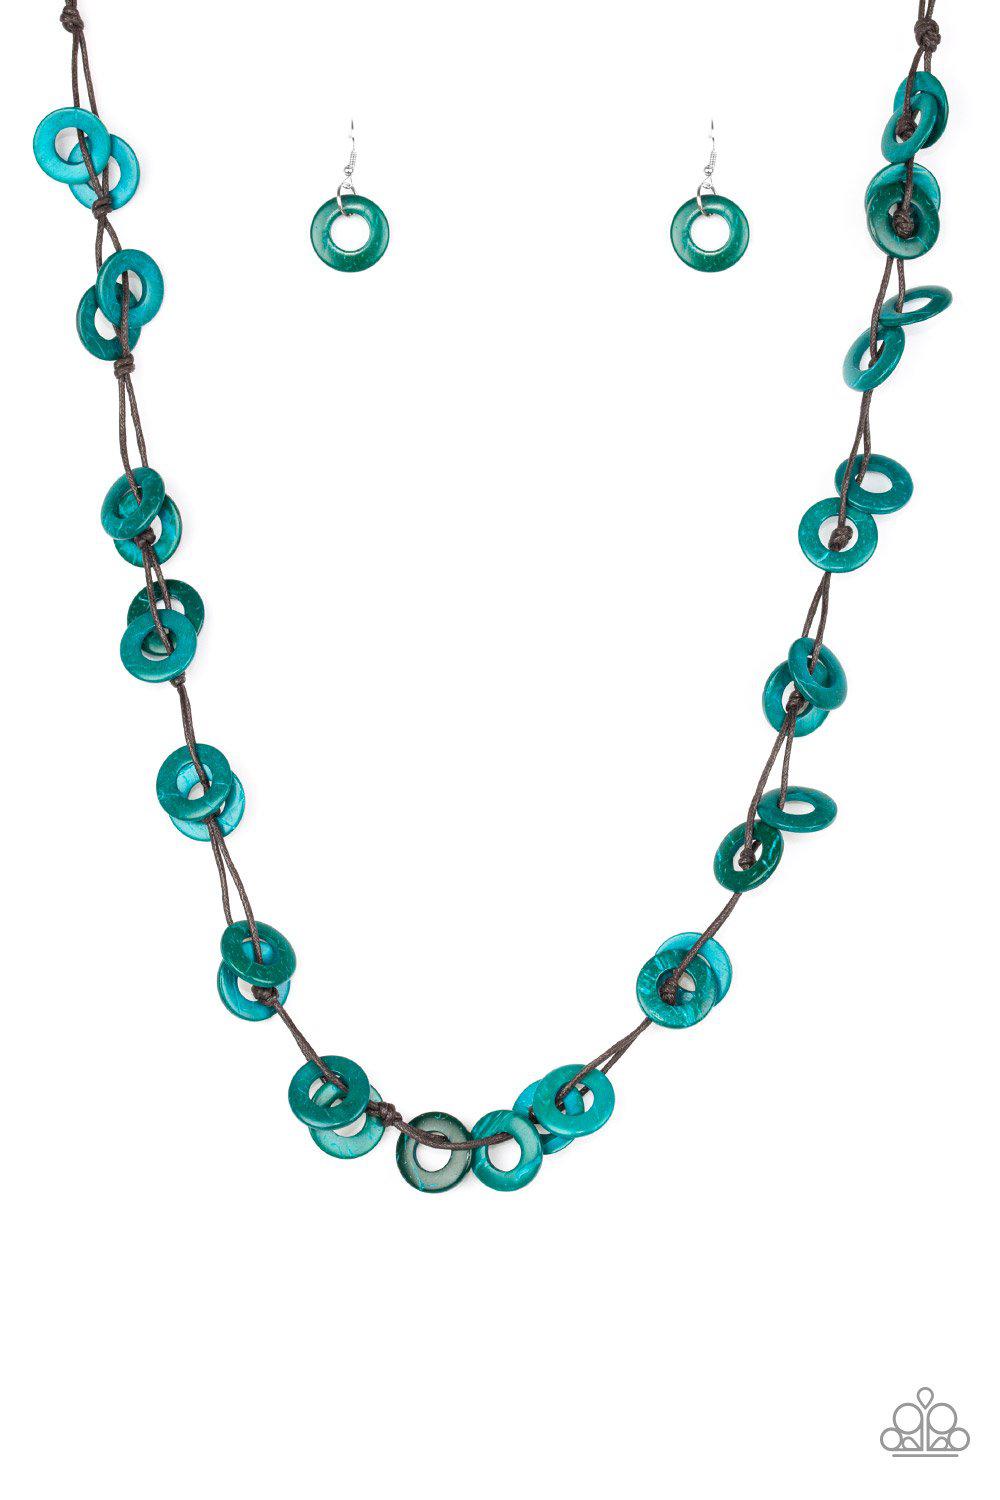 Waikiki Winds Blue Wood Necklace - Paparazzi Accessories - lightbox -CarasShop.com - $5 Jewelry by Cara Jewels